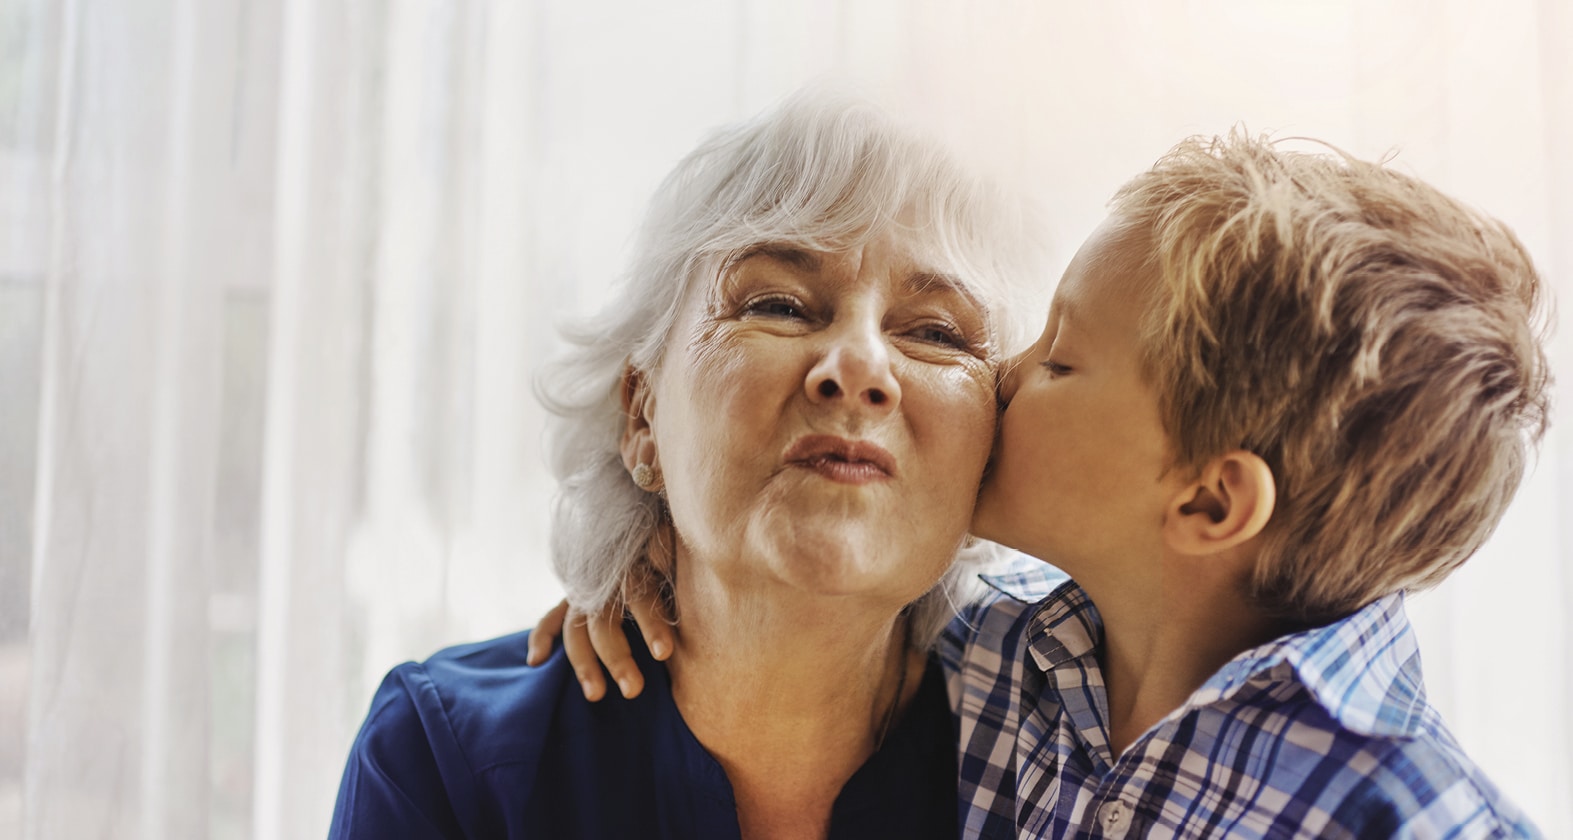 Grandson kissing his grandmother